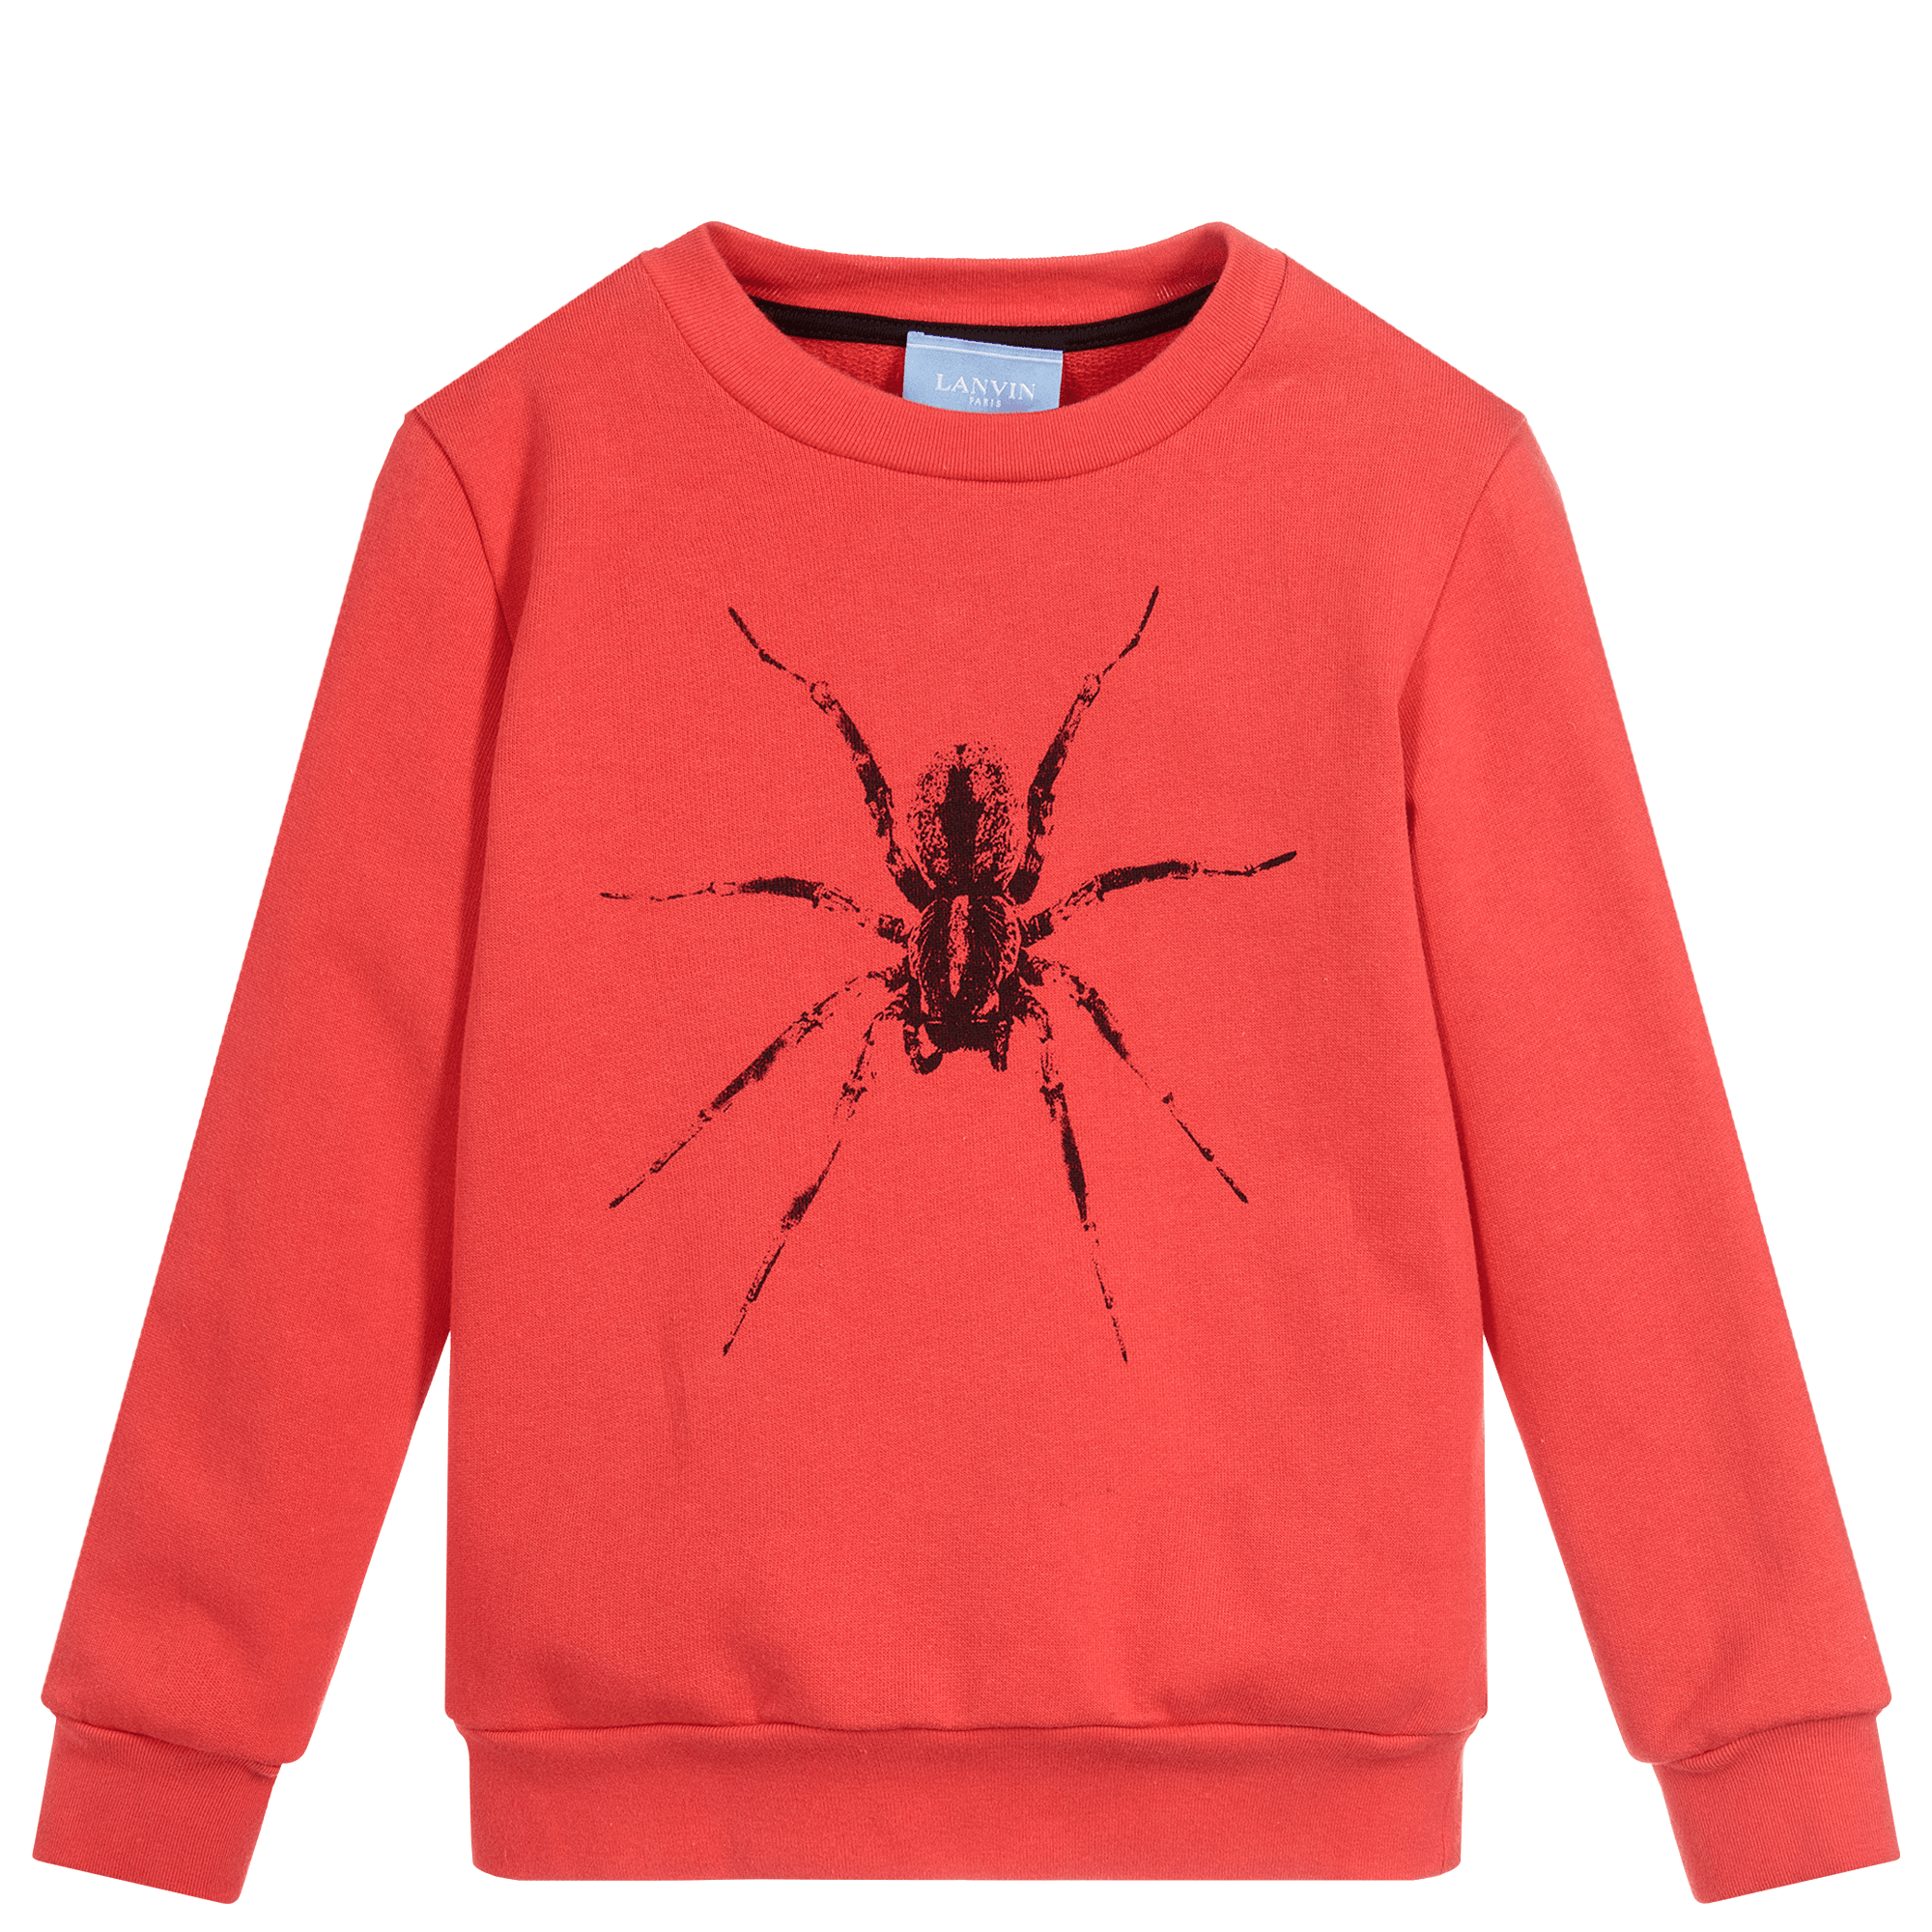 Lanvin Paris Boys Spider Sweatshirt Red - RED 8Y